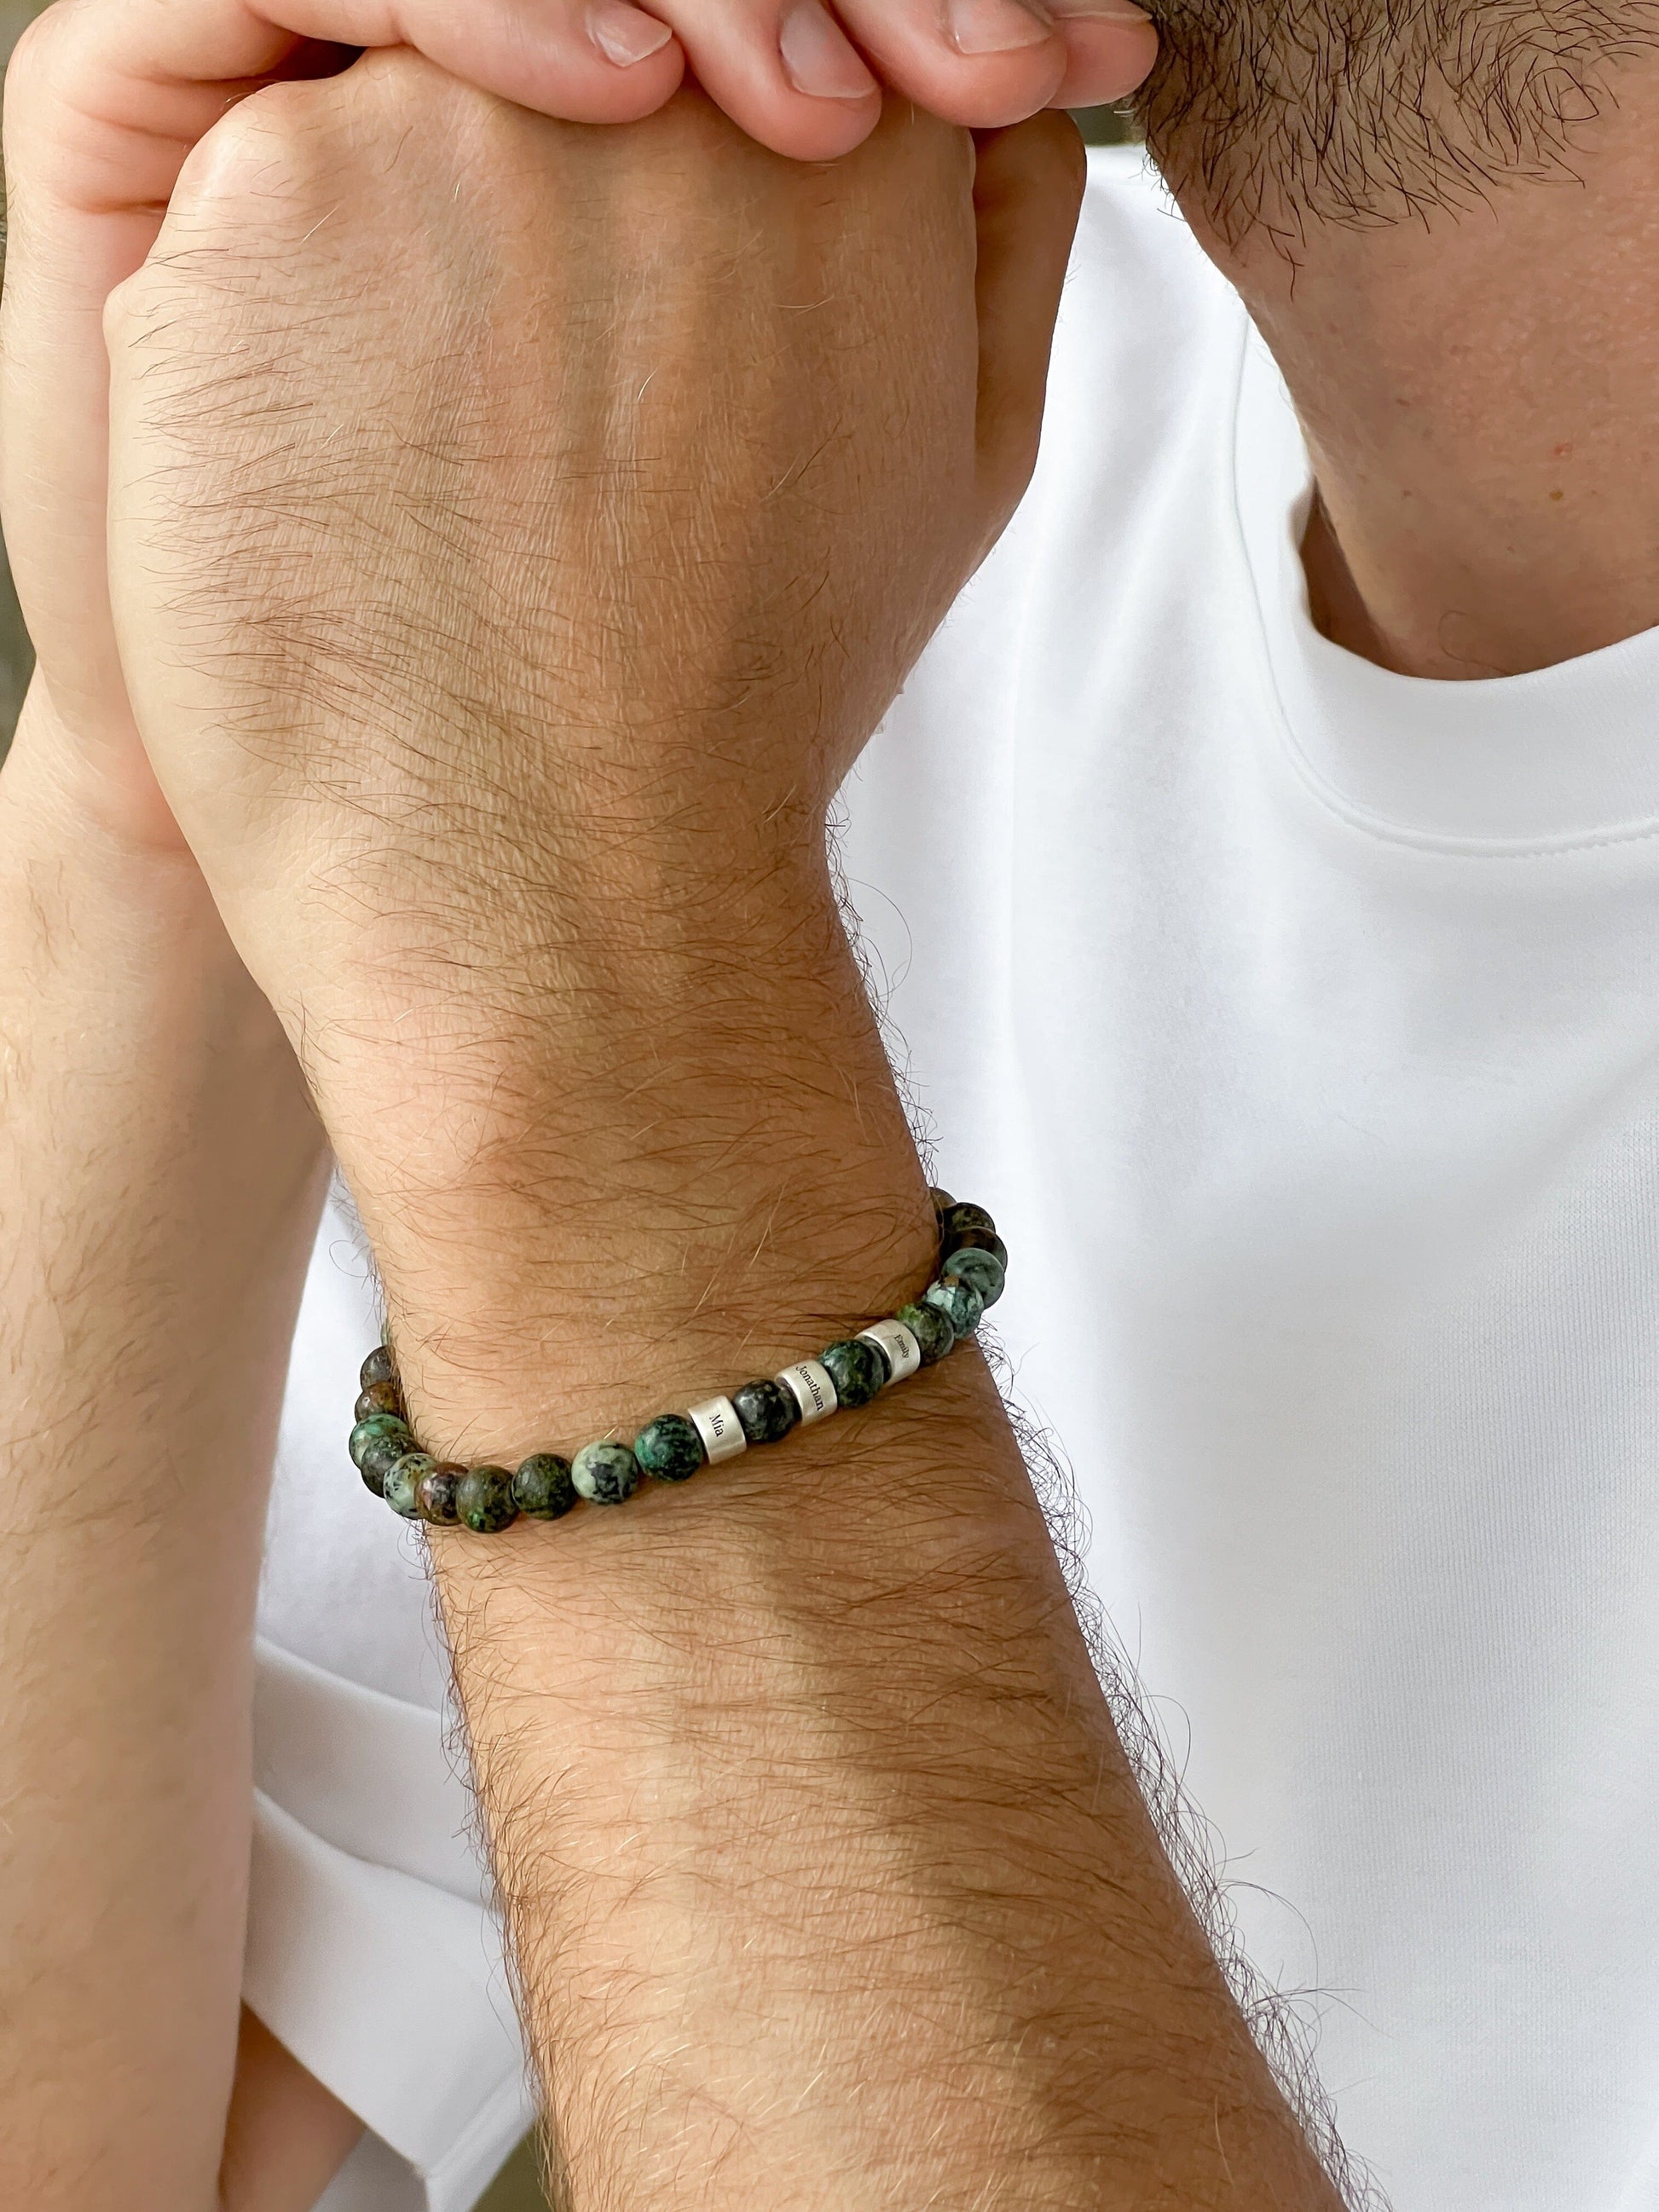 Dad's Legacy Beads Bracelet w/ Turquoise Stones - 18K Gold Vermeil Bracelets magal-dev 